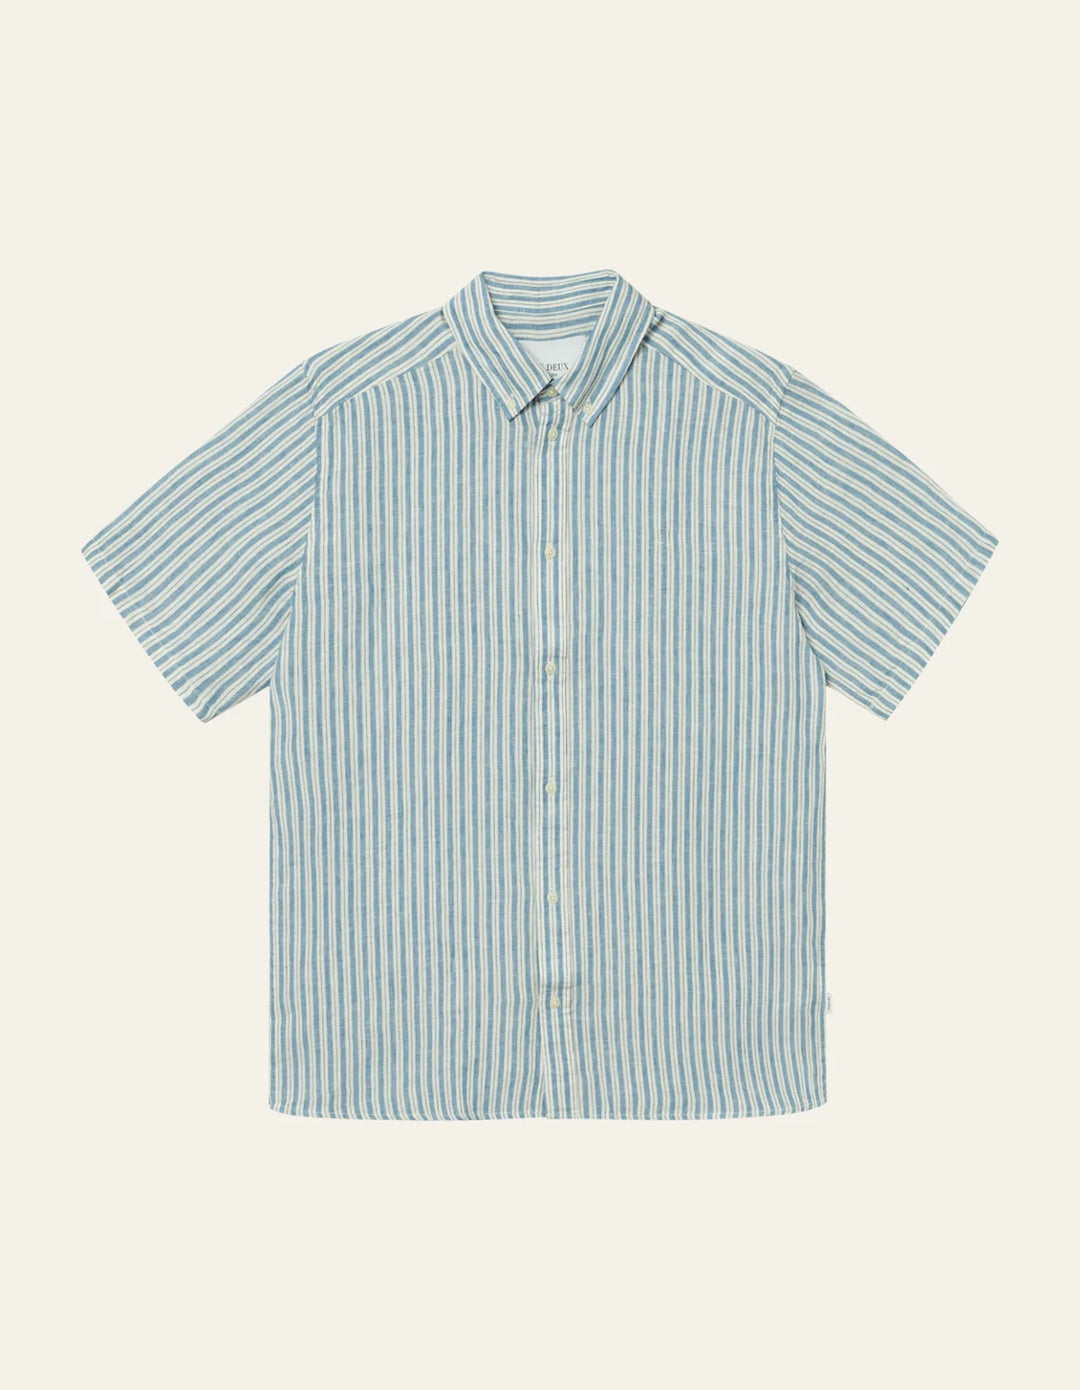 Kris Linen SS Shirt  Washed Denim Blue/Ivory